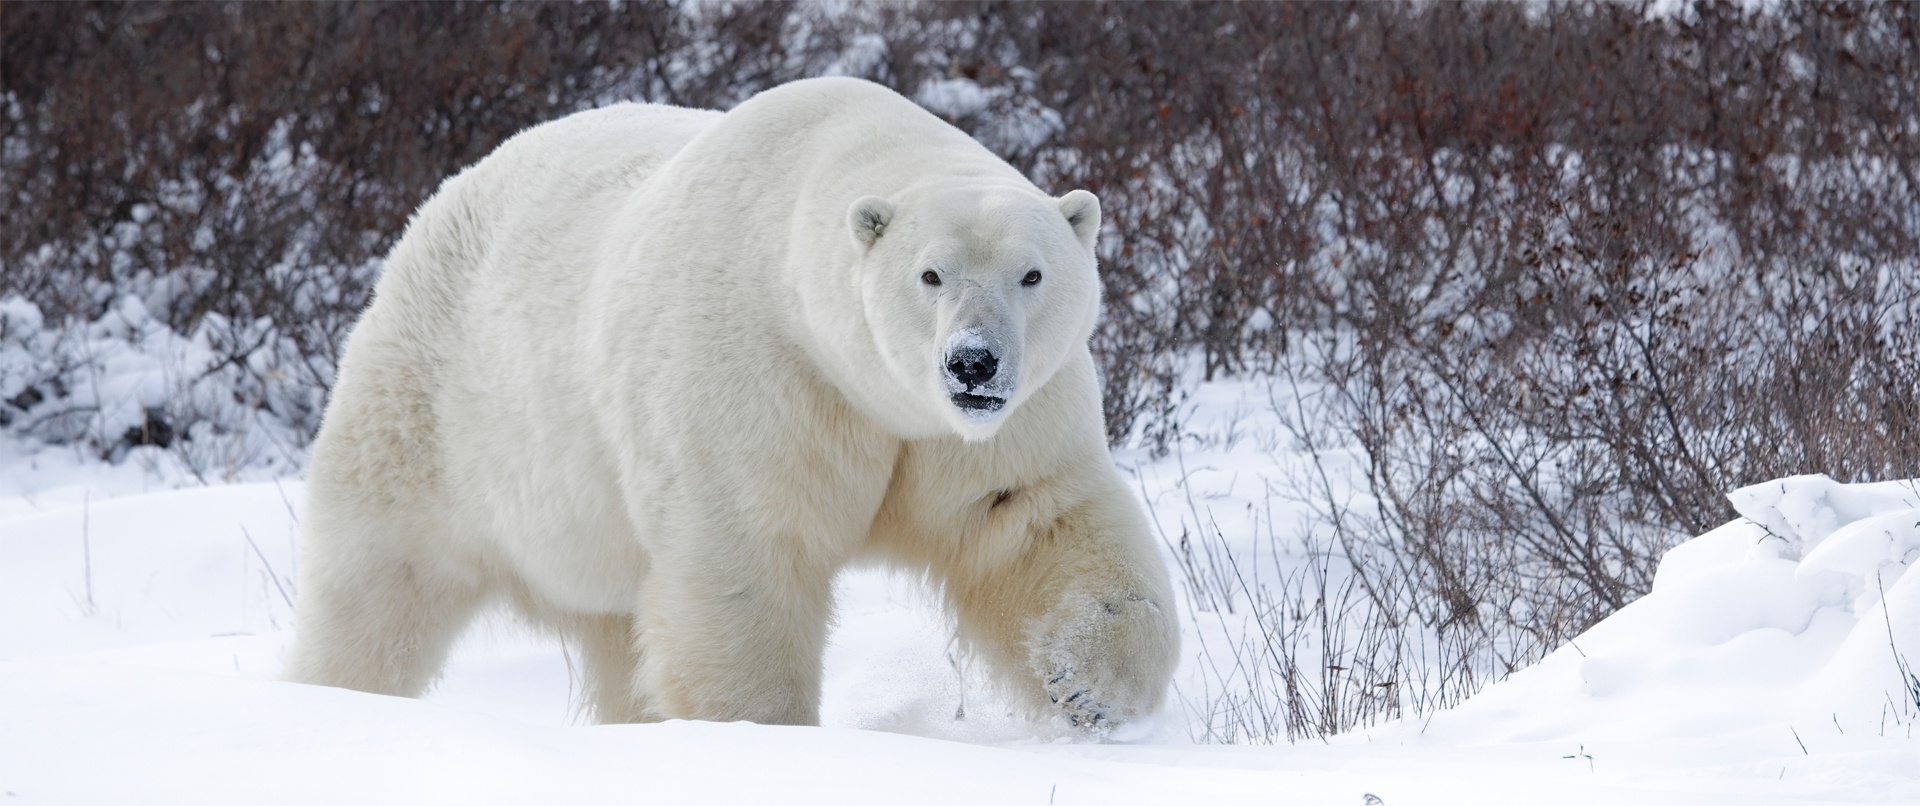 Kindness, Polar Bear-A-Palooza, for Peggy Peregrine-Spear and Glatzer Group